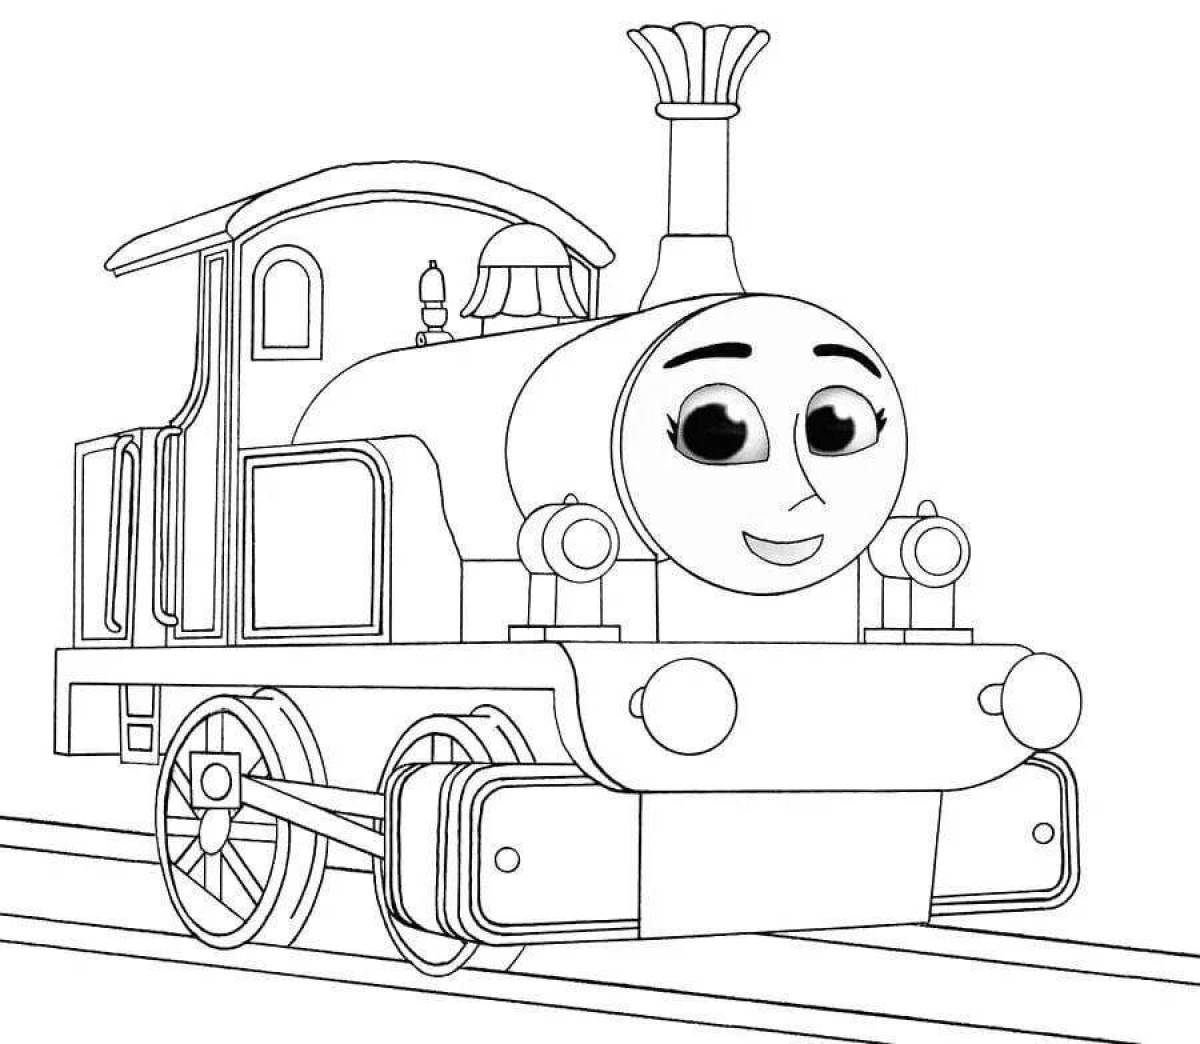 Thomas' amazing train coloring page